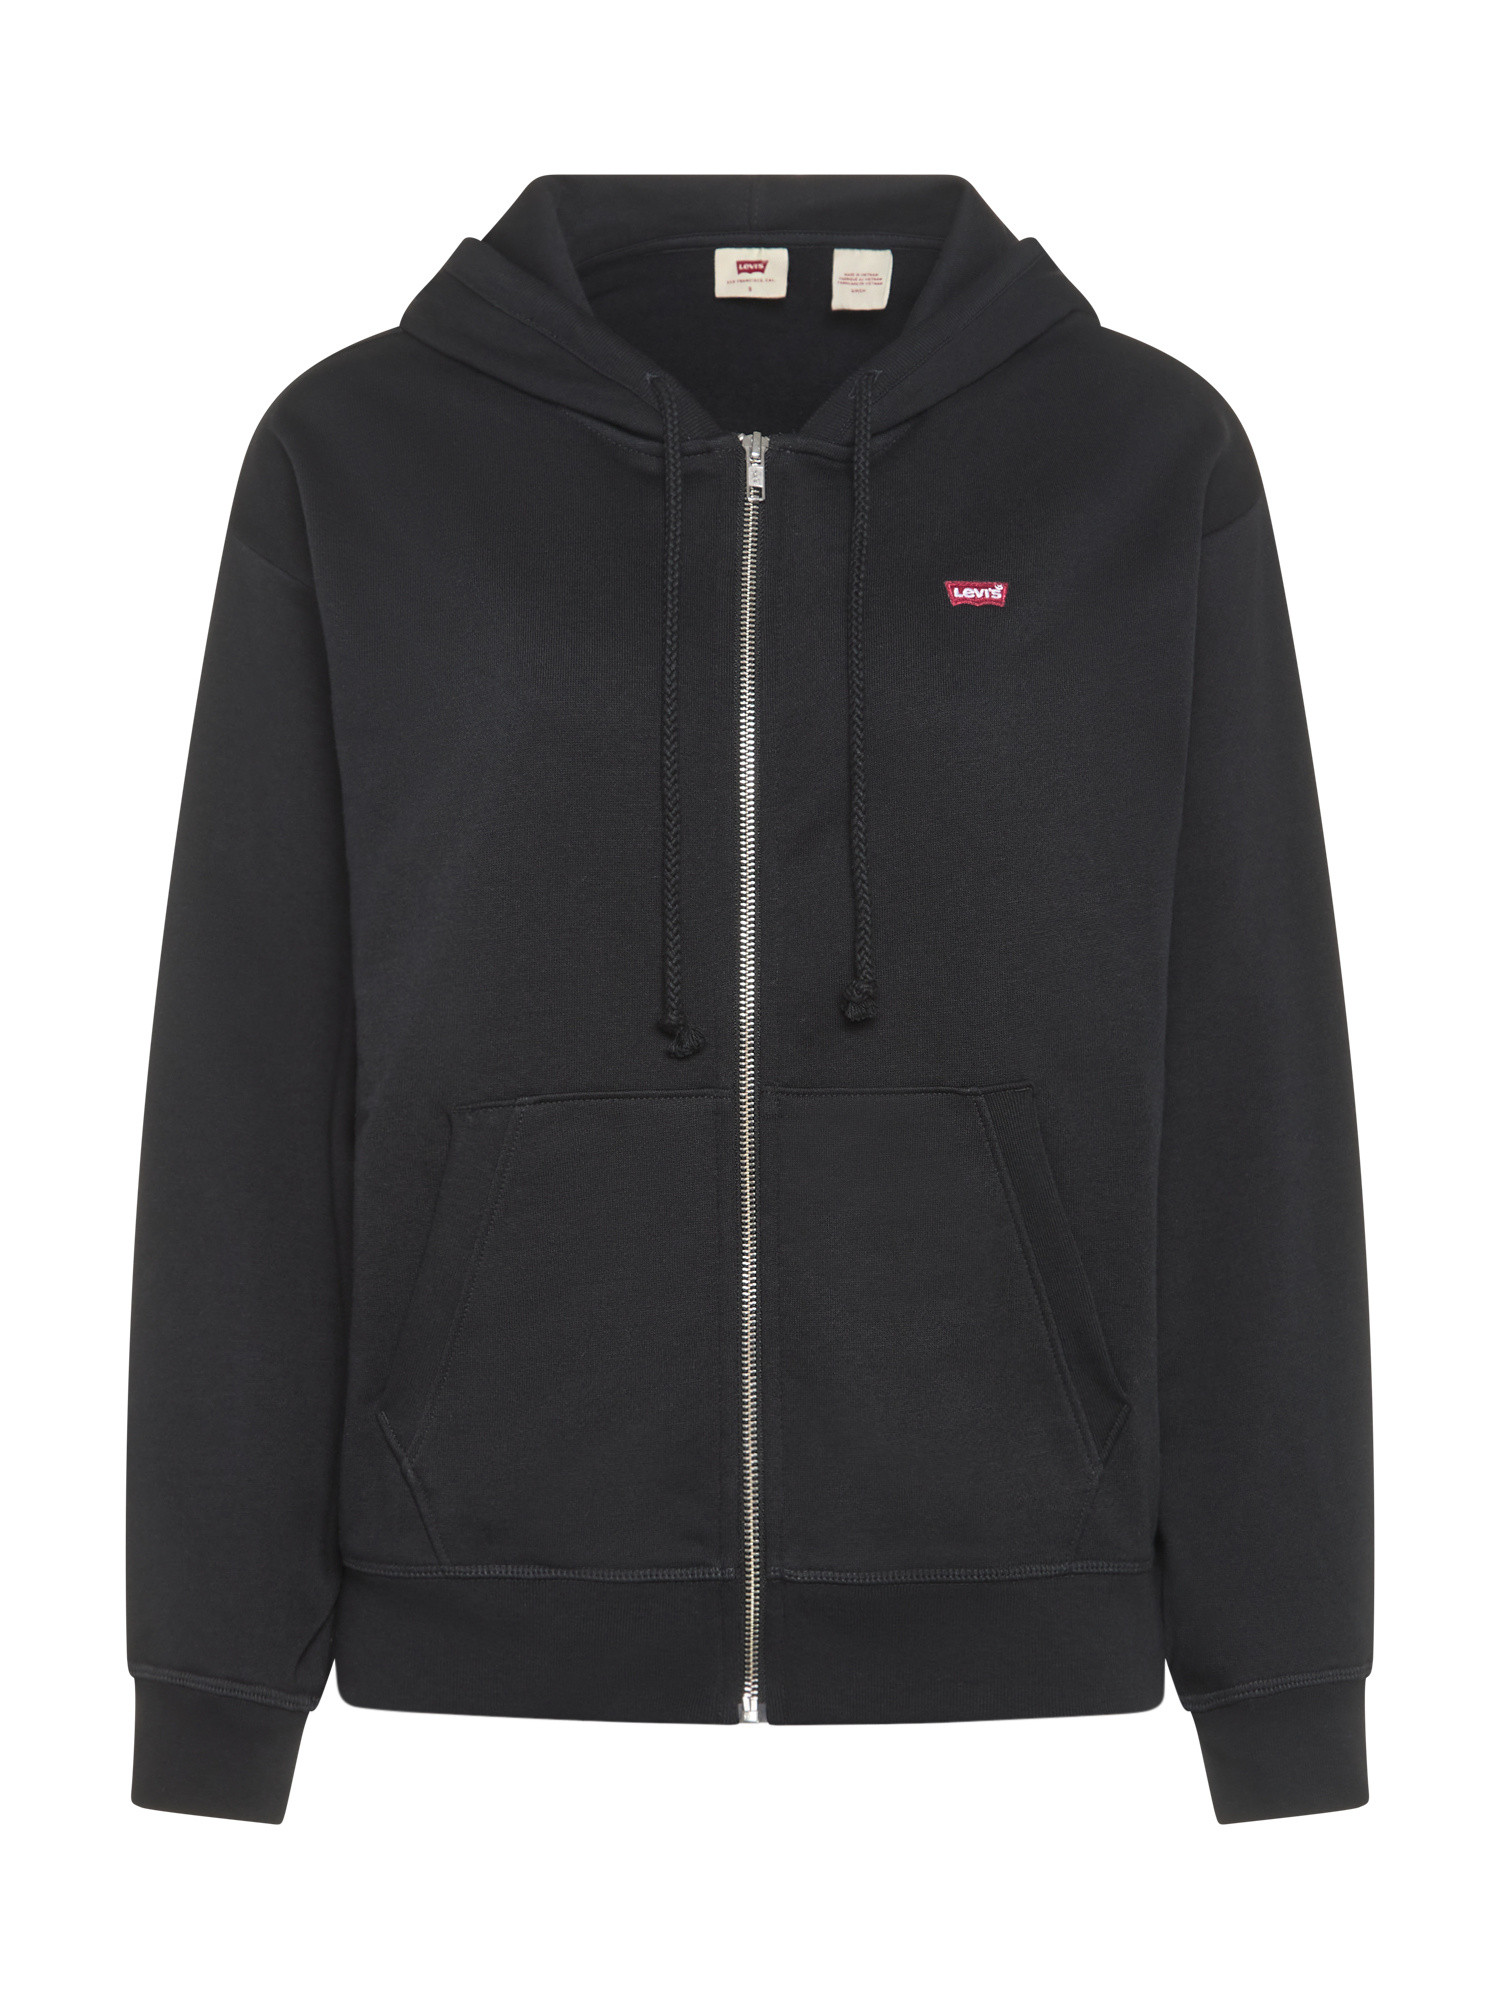 Sweatshirt with zip and hood, Black, large image number 0